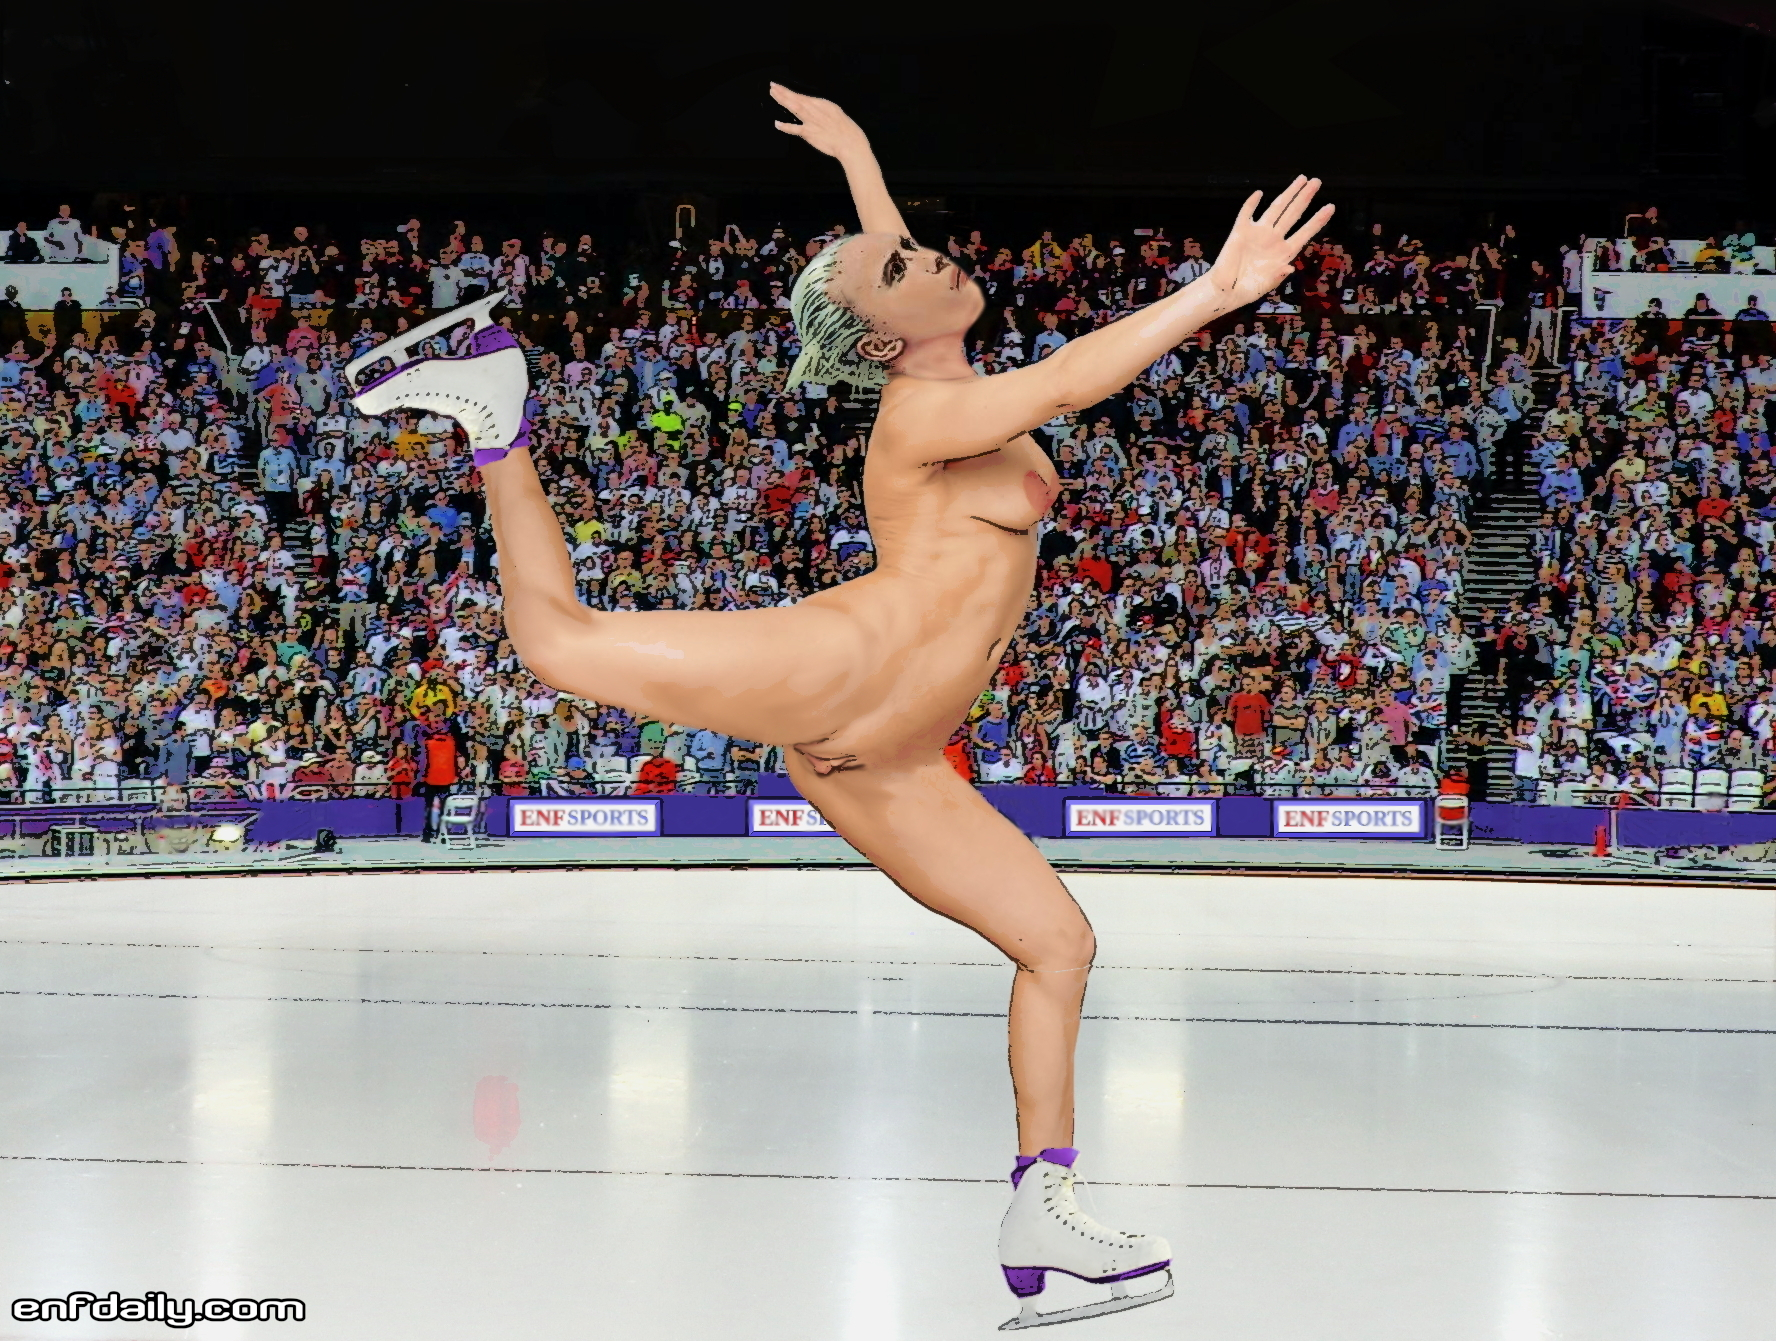 Figure skater nudes